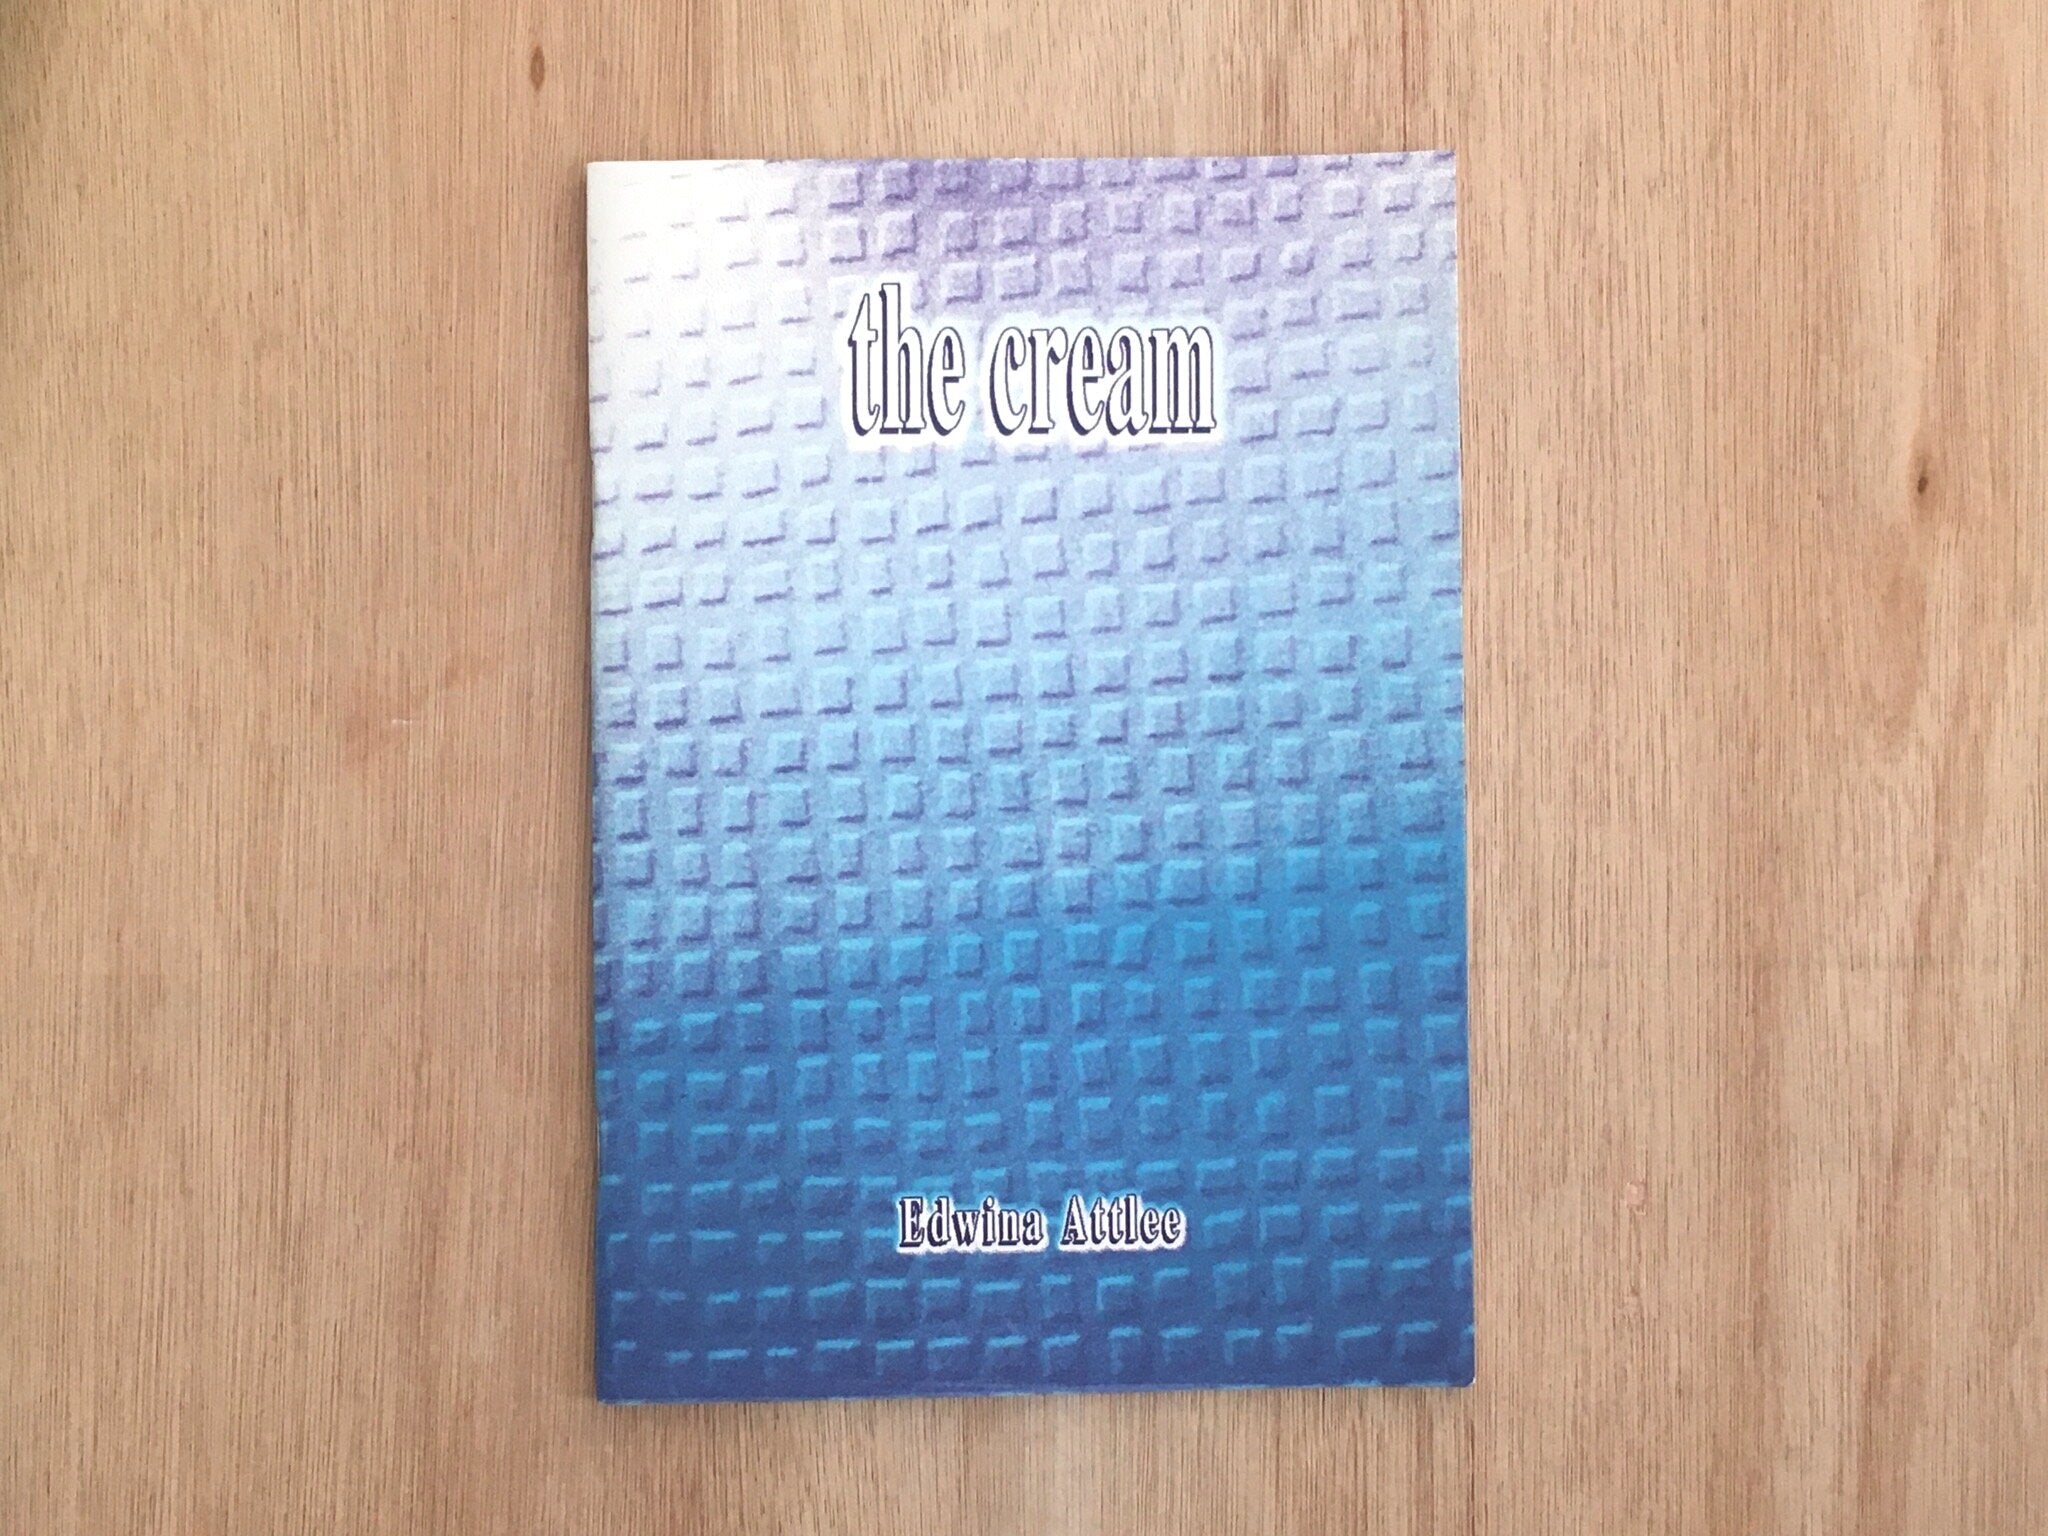 THE CREAM by Edwina Attlee